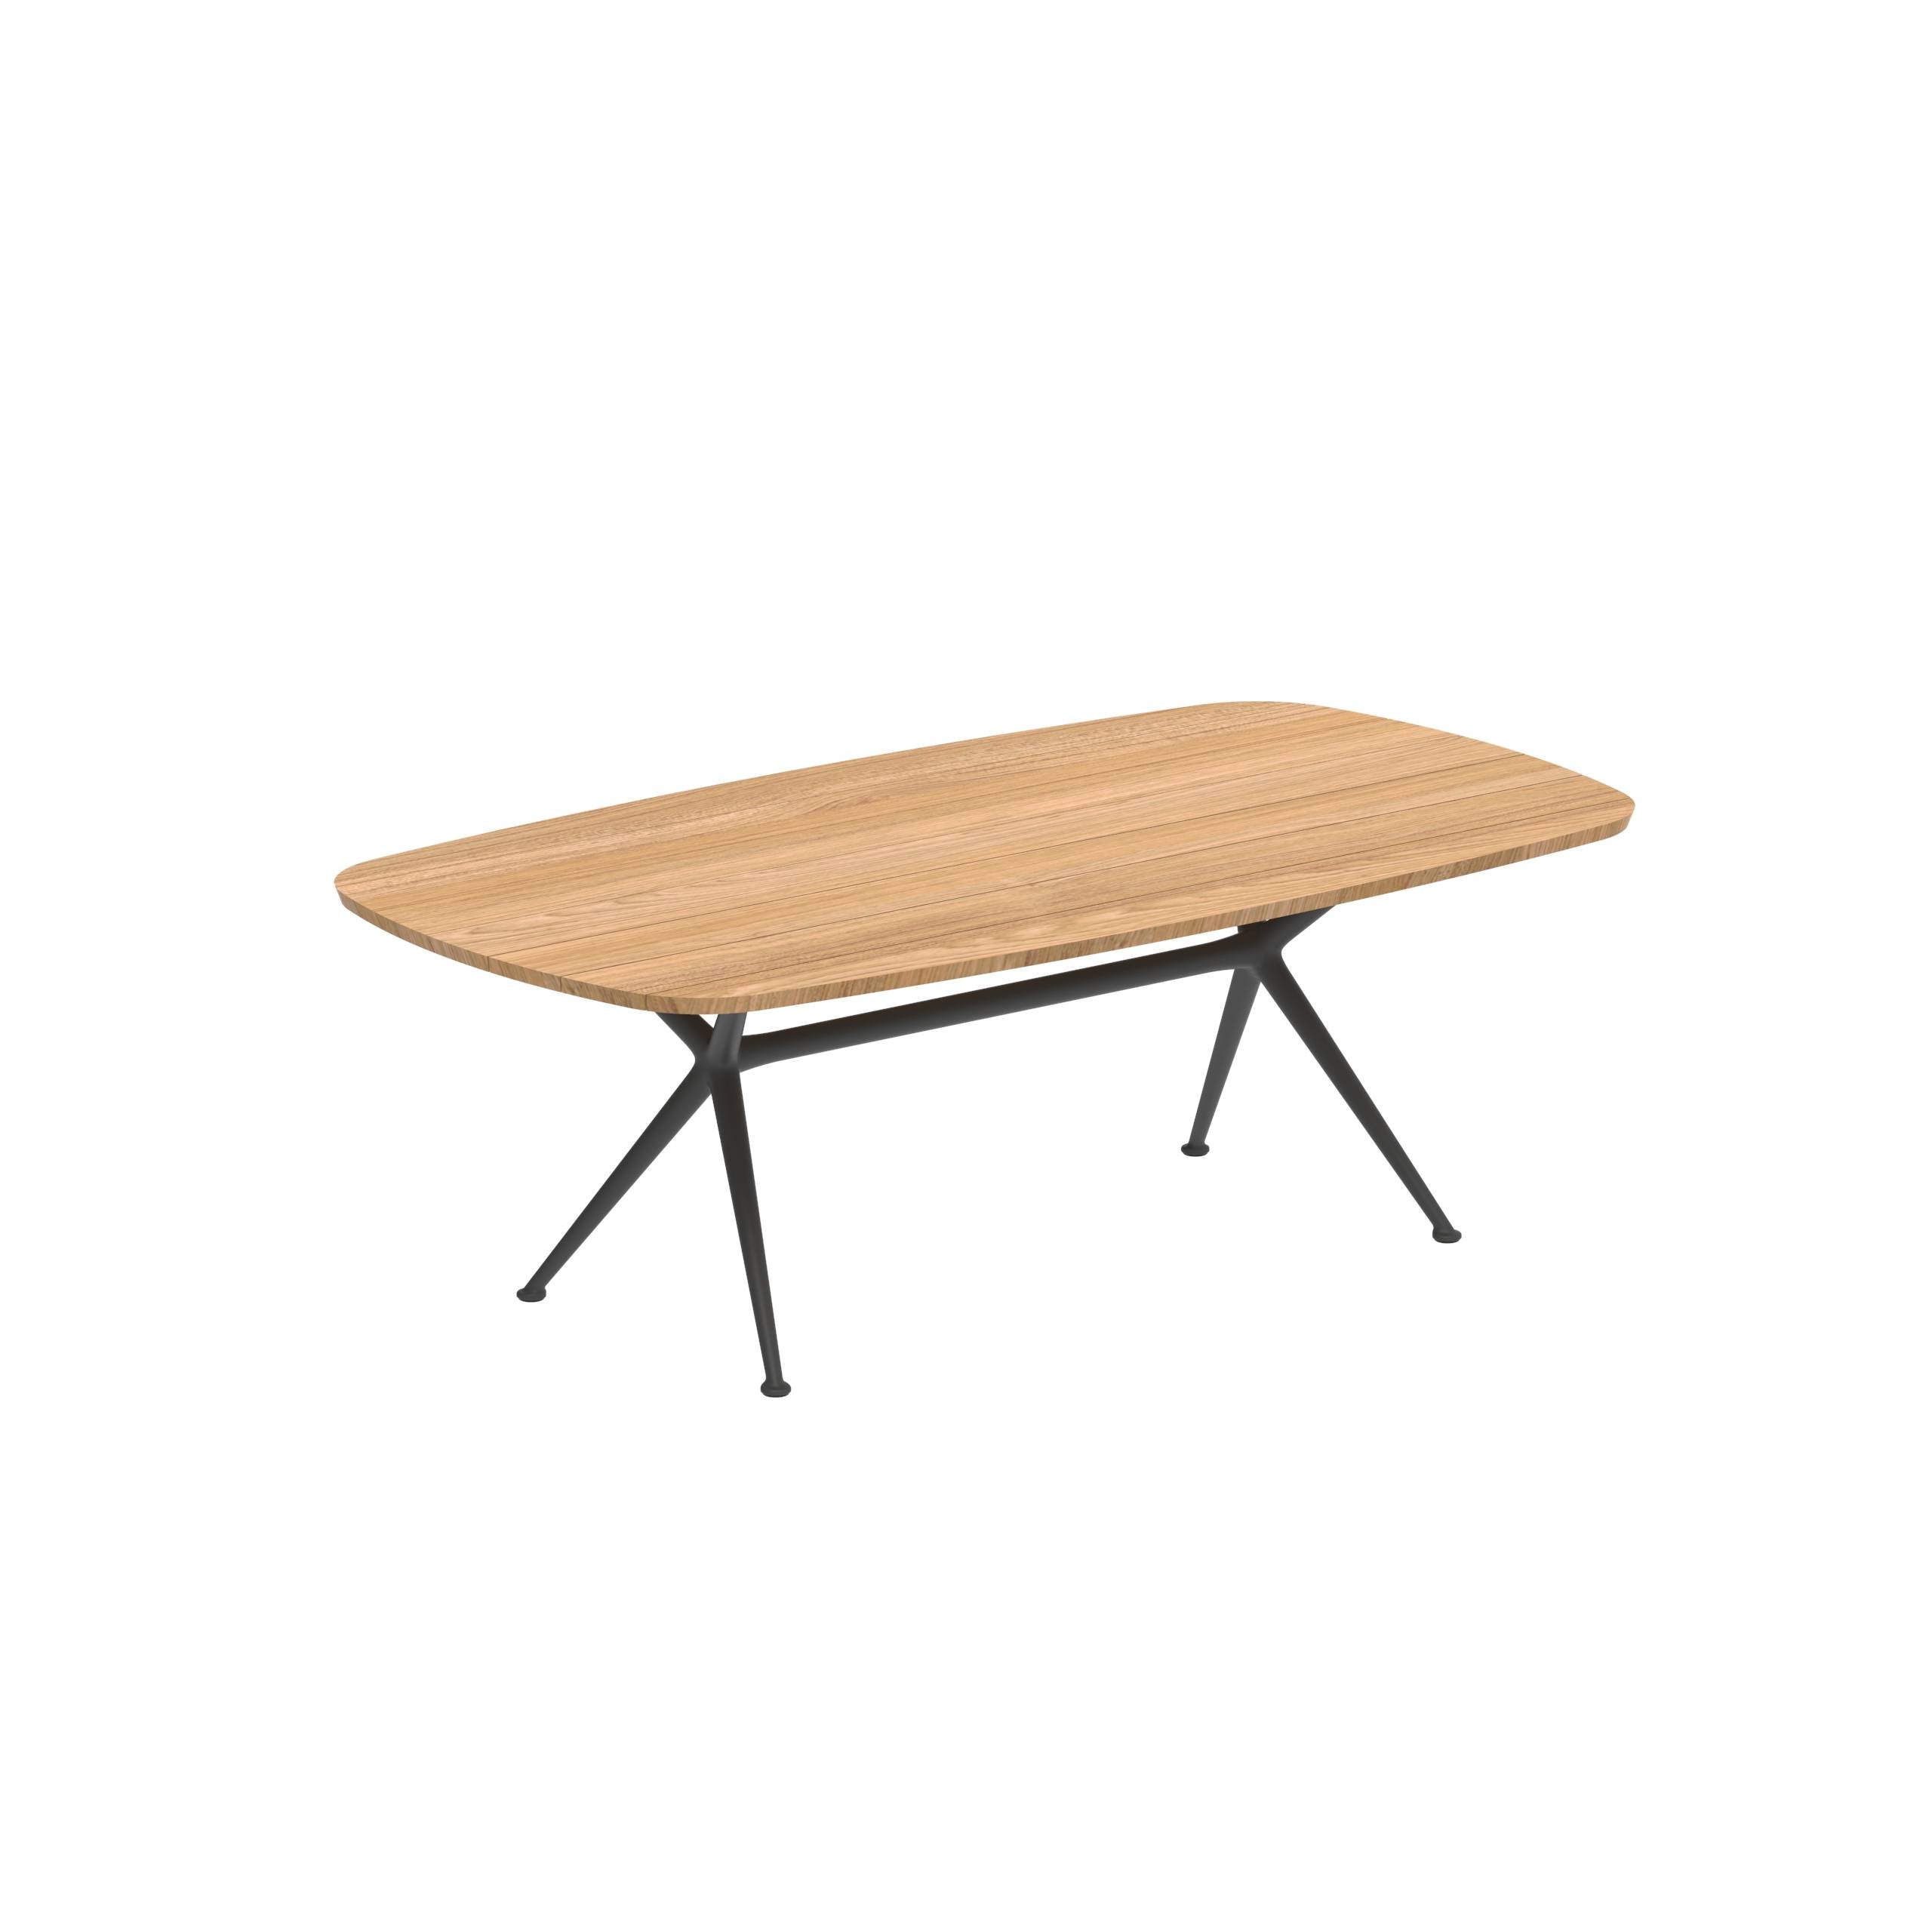 Exes Table 220x120cm Alu Legs Anthracite - Teak Table Top